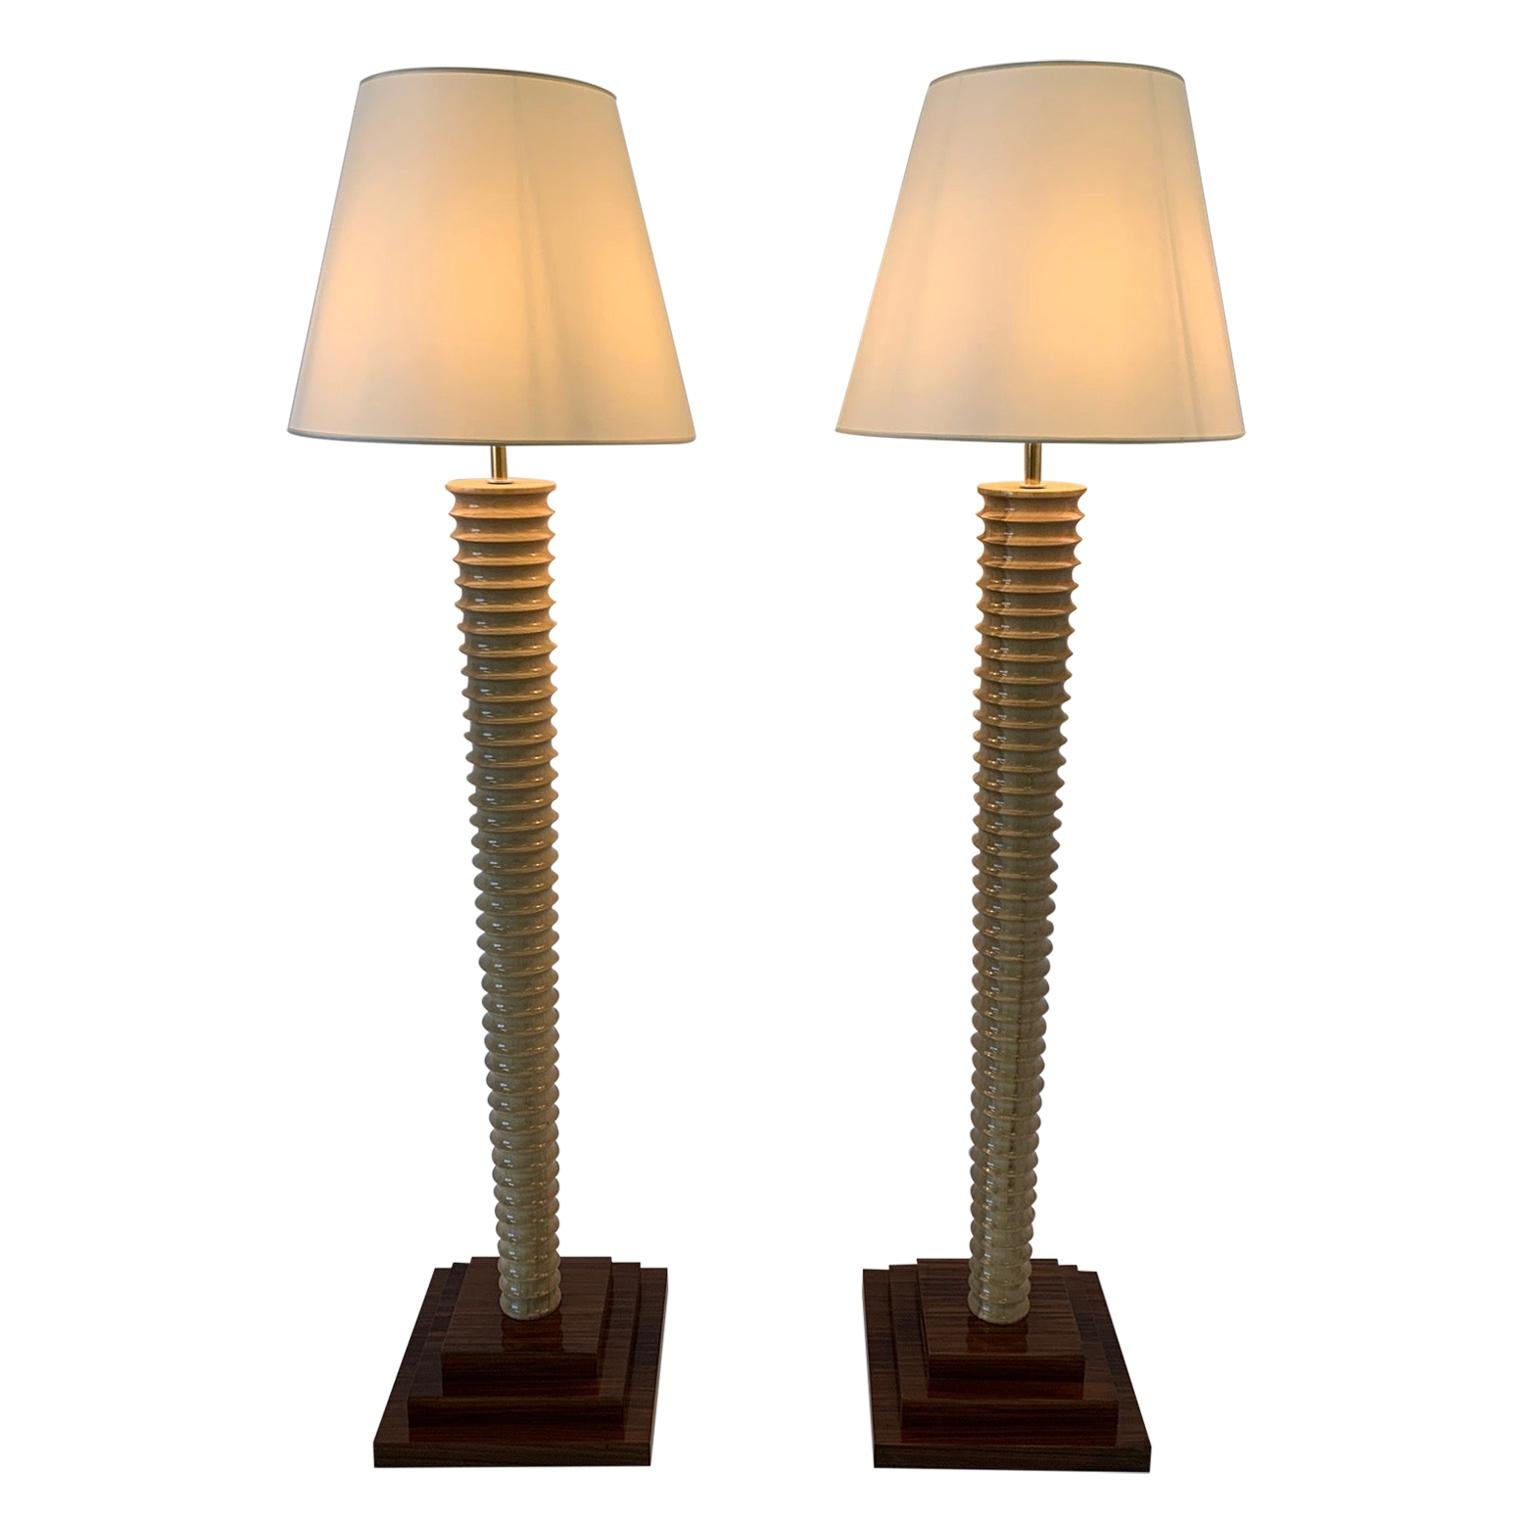 Pair of Italian Art Deco Floor Lamps